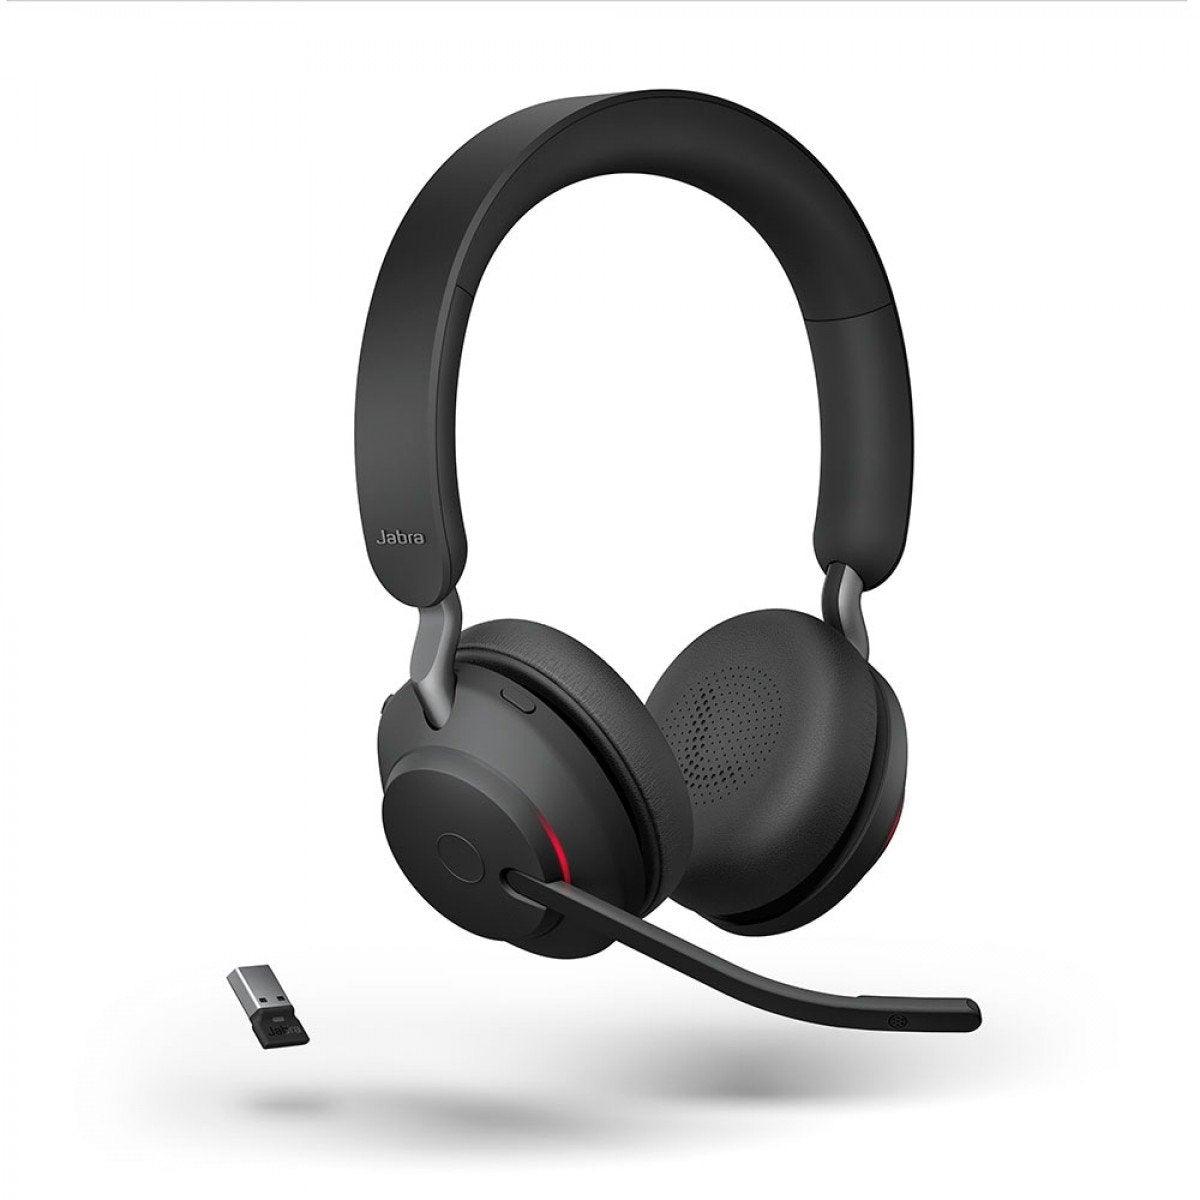 Snom D745 Evolve2 65 Advanced Bluetooth Headset - Headsets4business